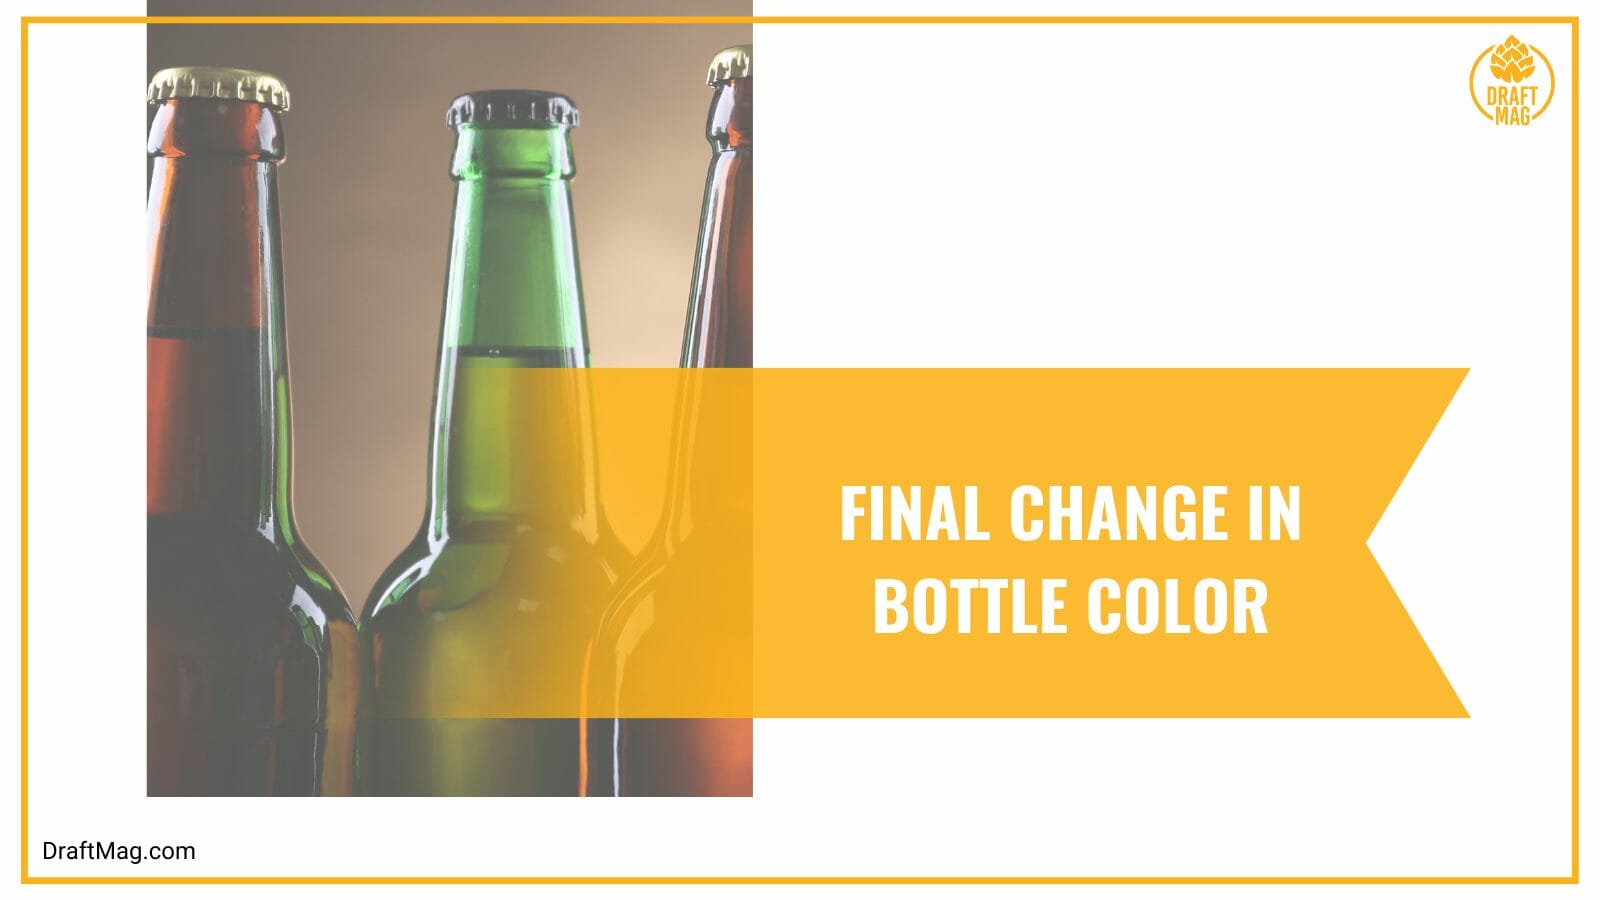 Final change in bottle color